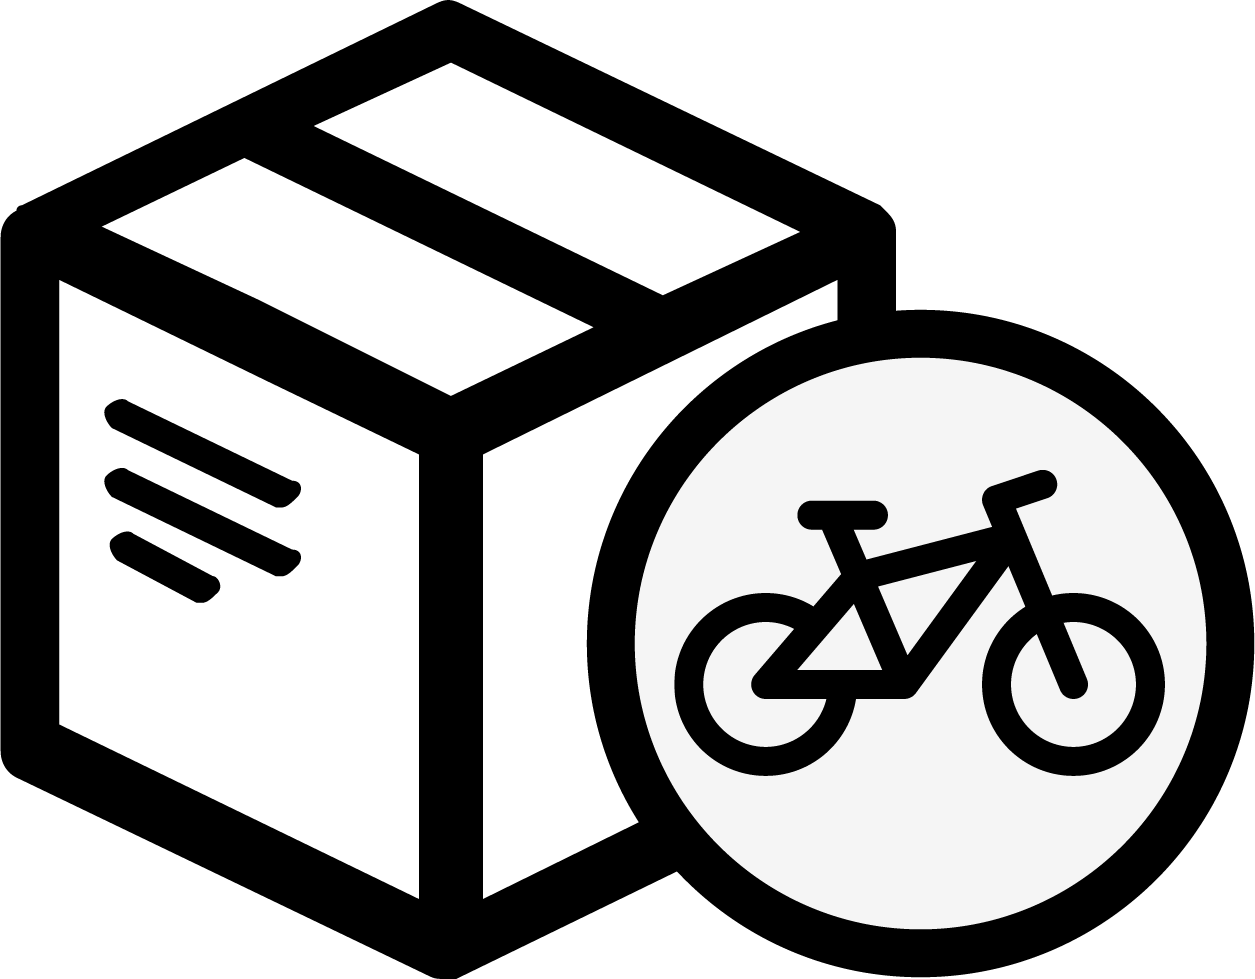 boxed bike icon